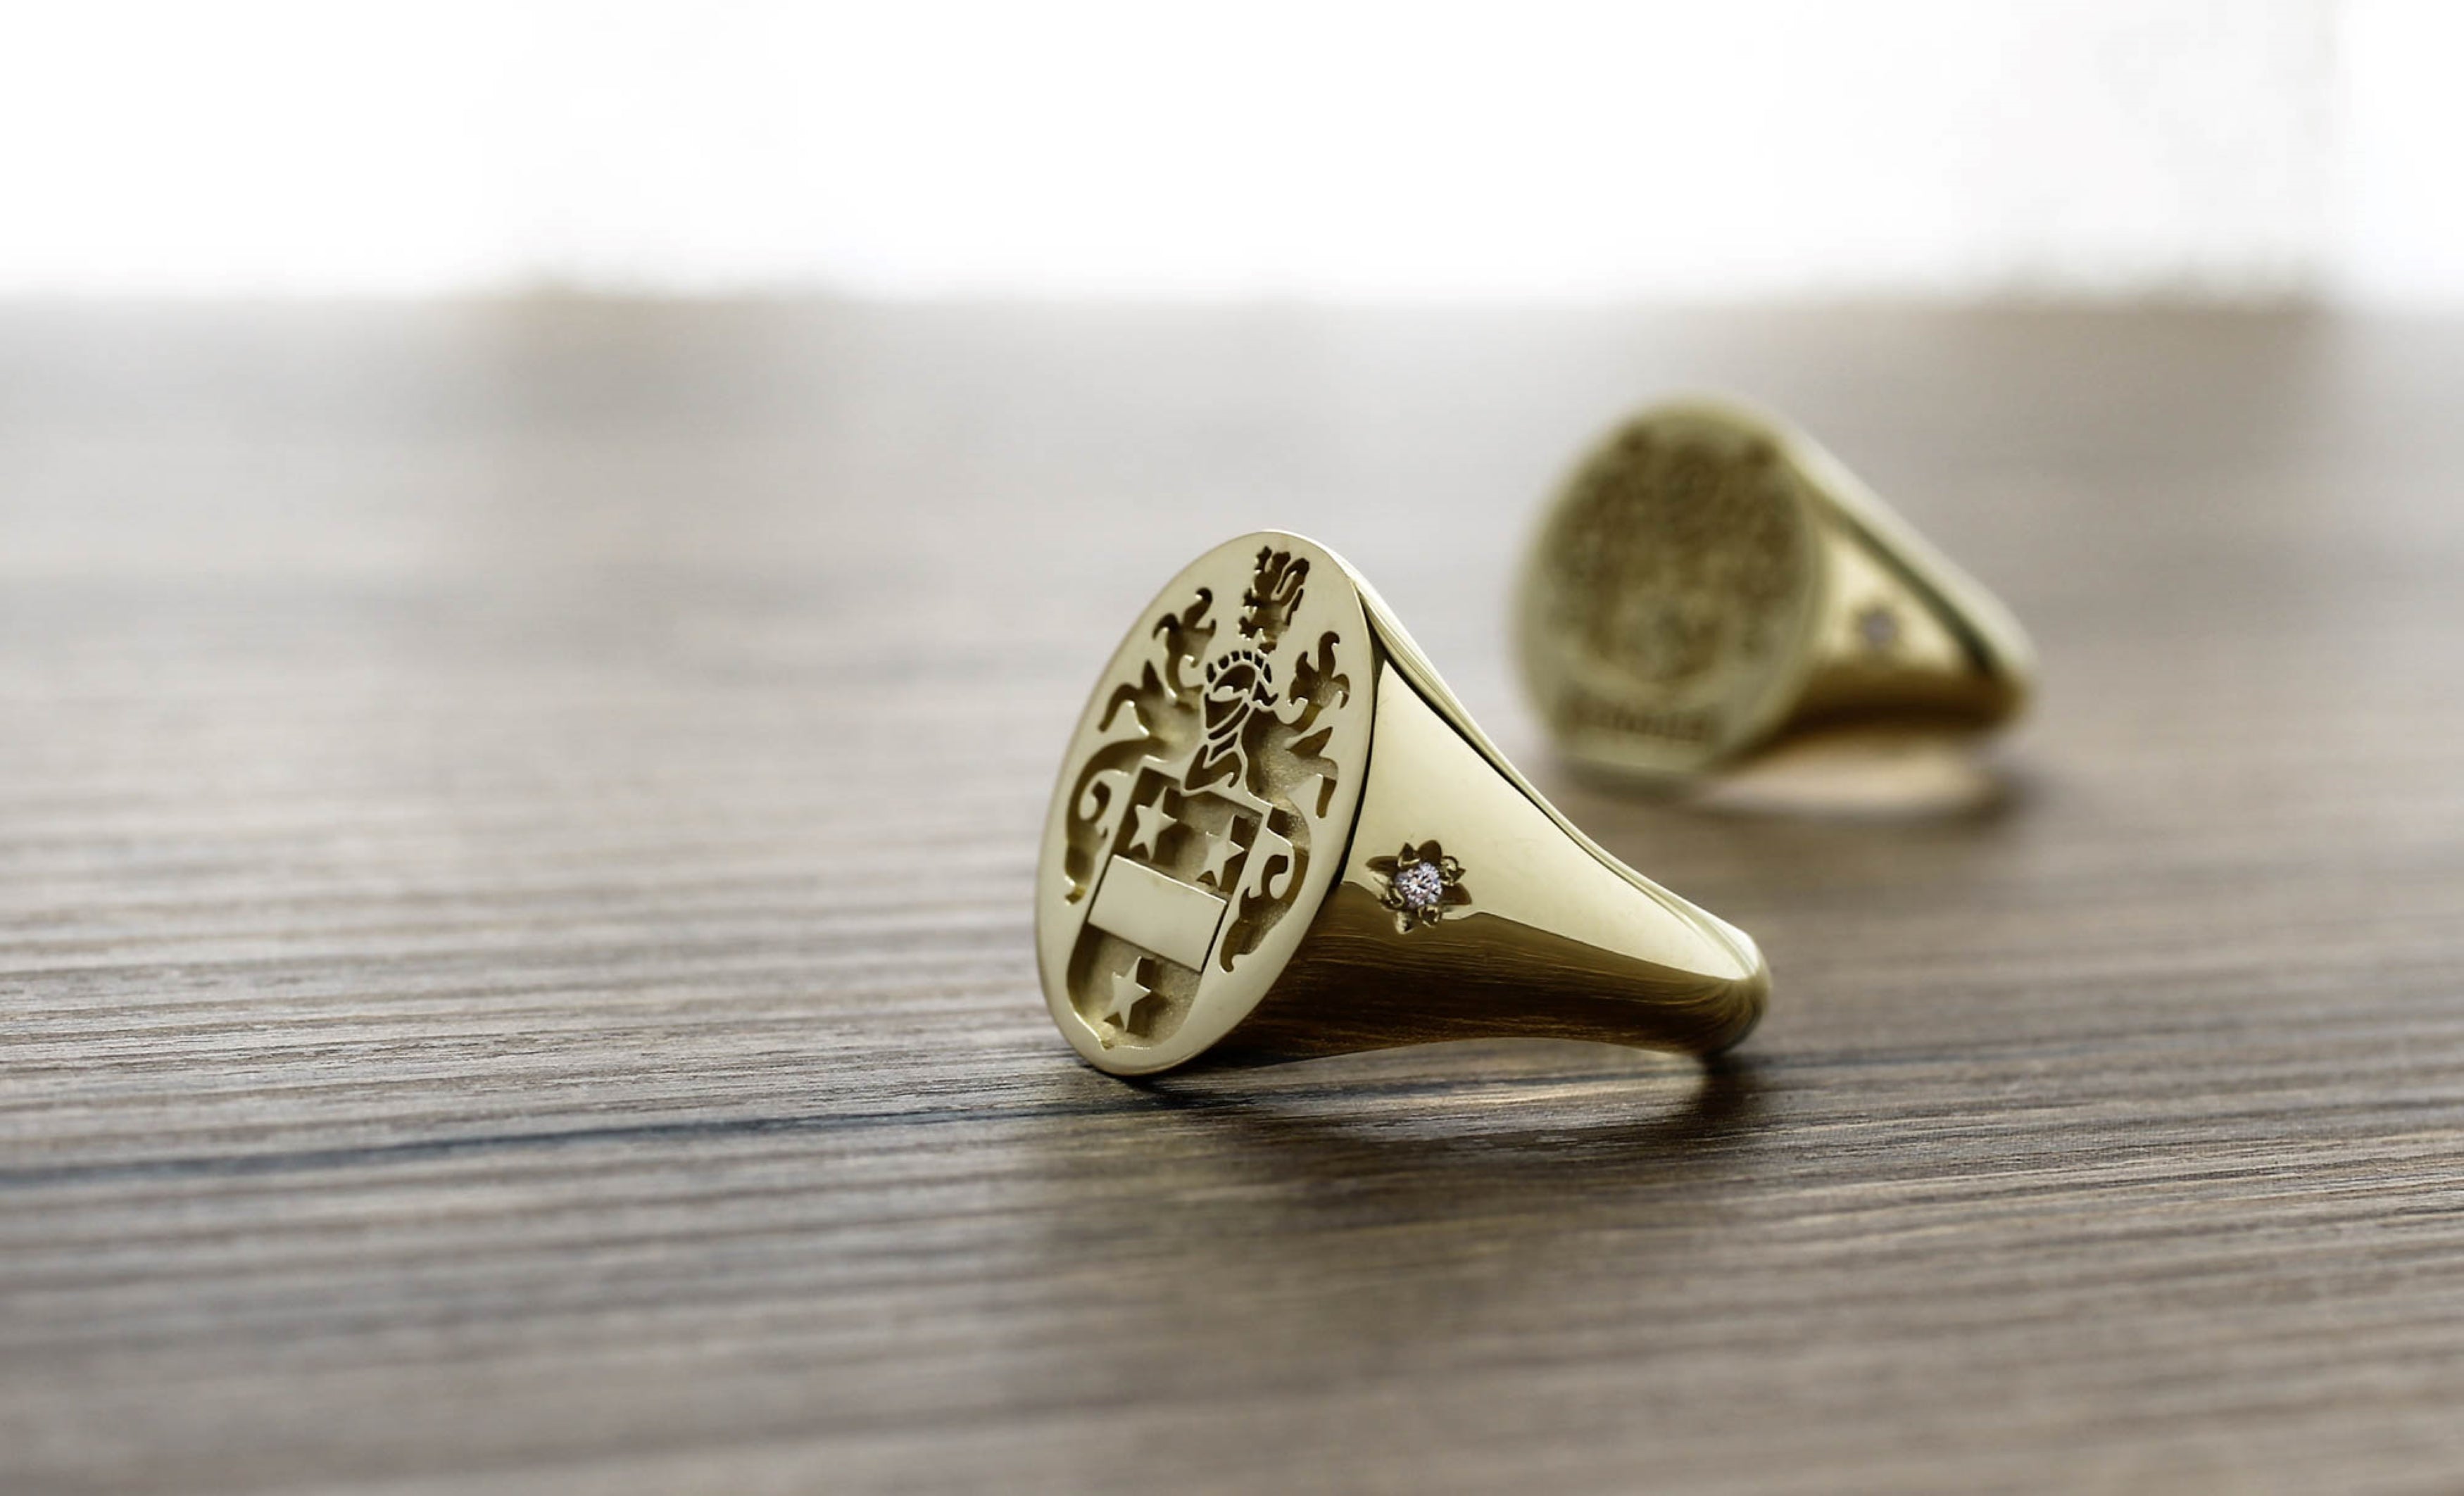 Brand New Men's 18K Gold Signet Knights Crest Ring Size 12 - Free Shipping  | eBay